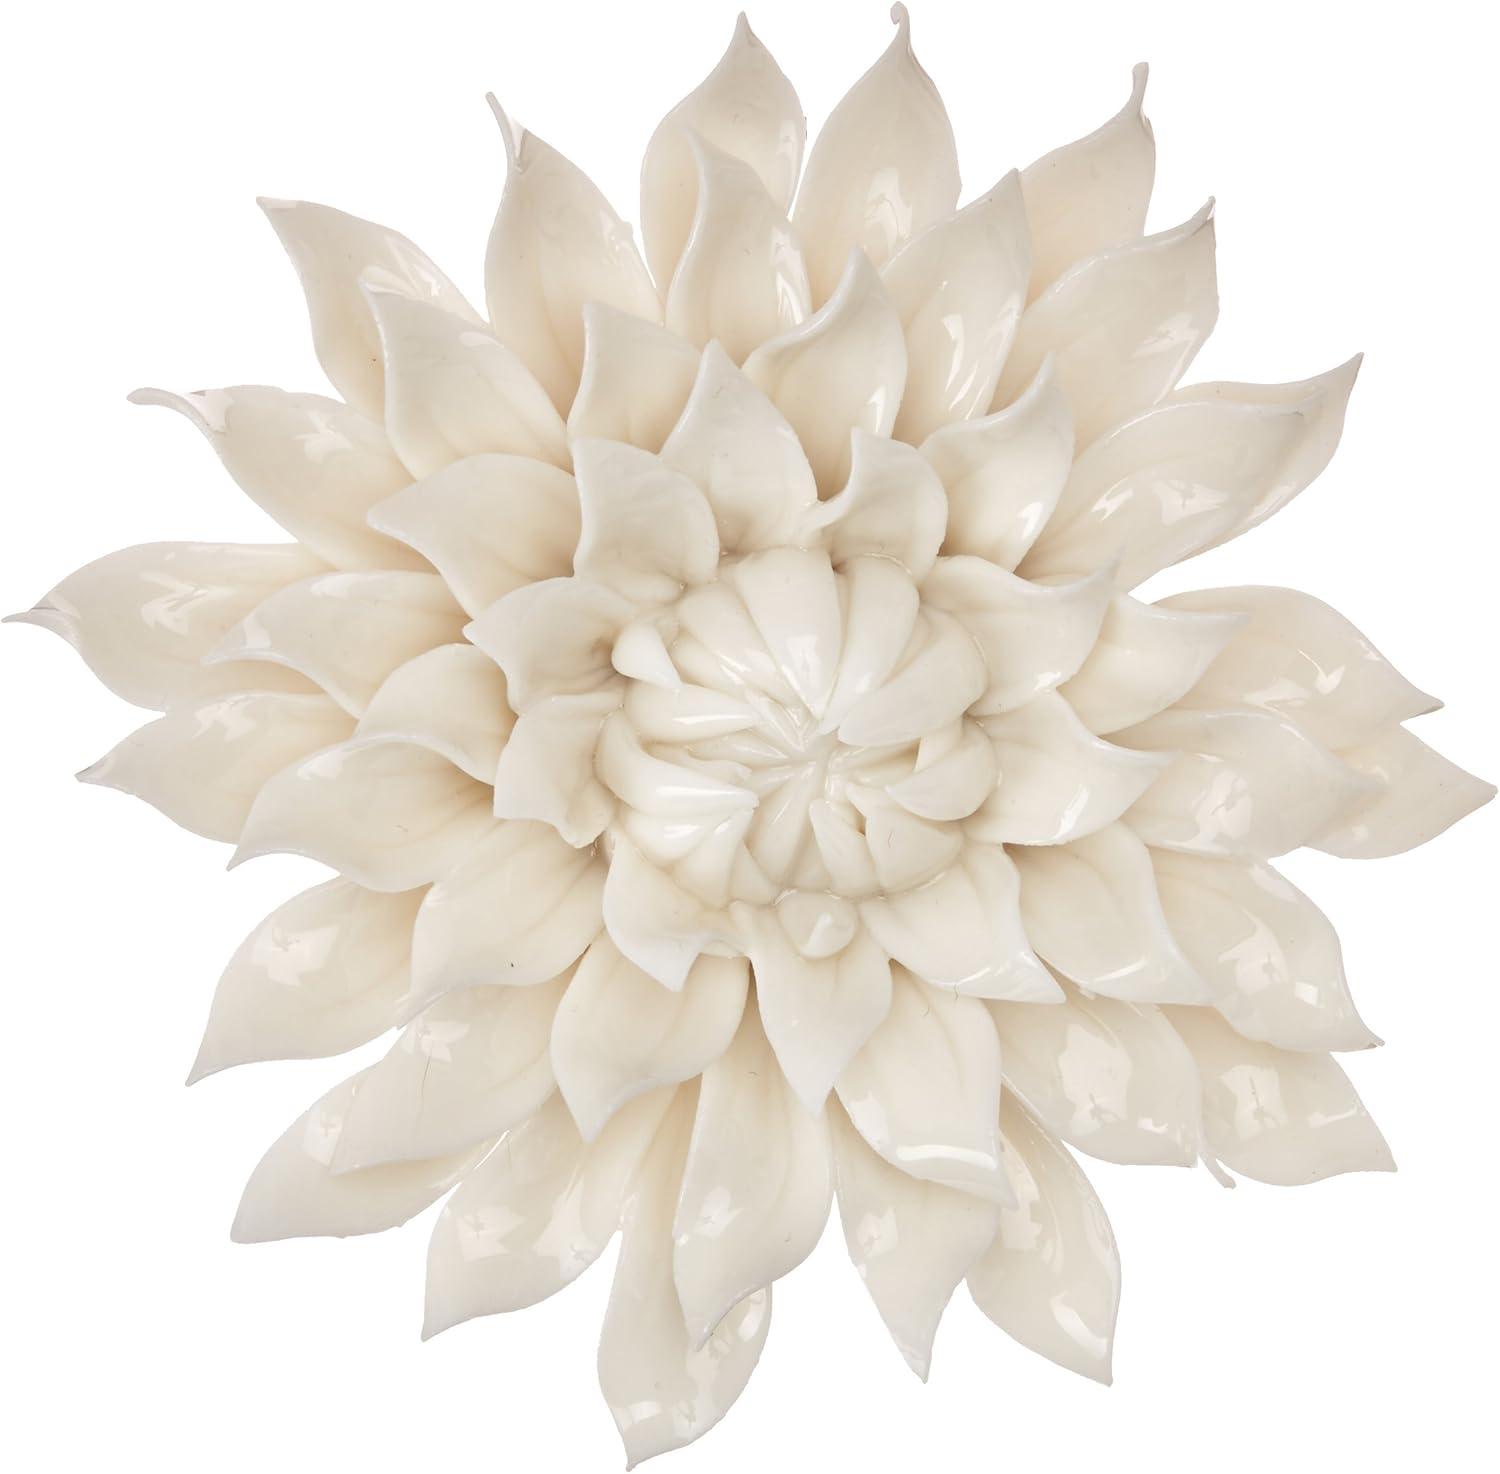 Blossoming Spring 3.5" White Ceramic Wall Decor